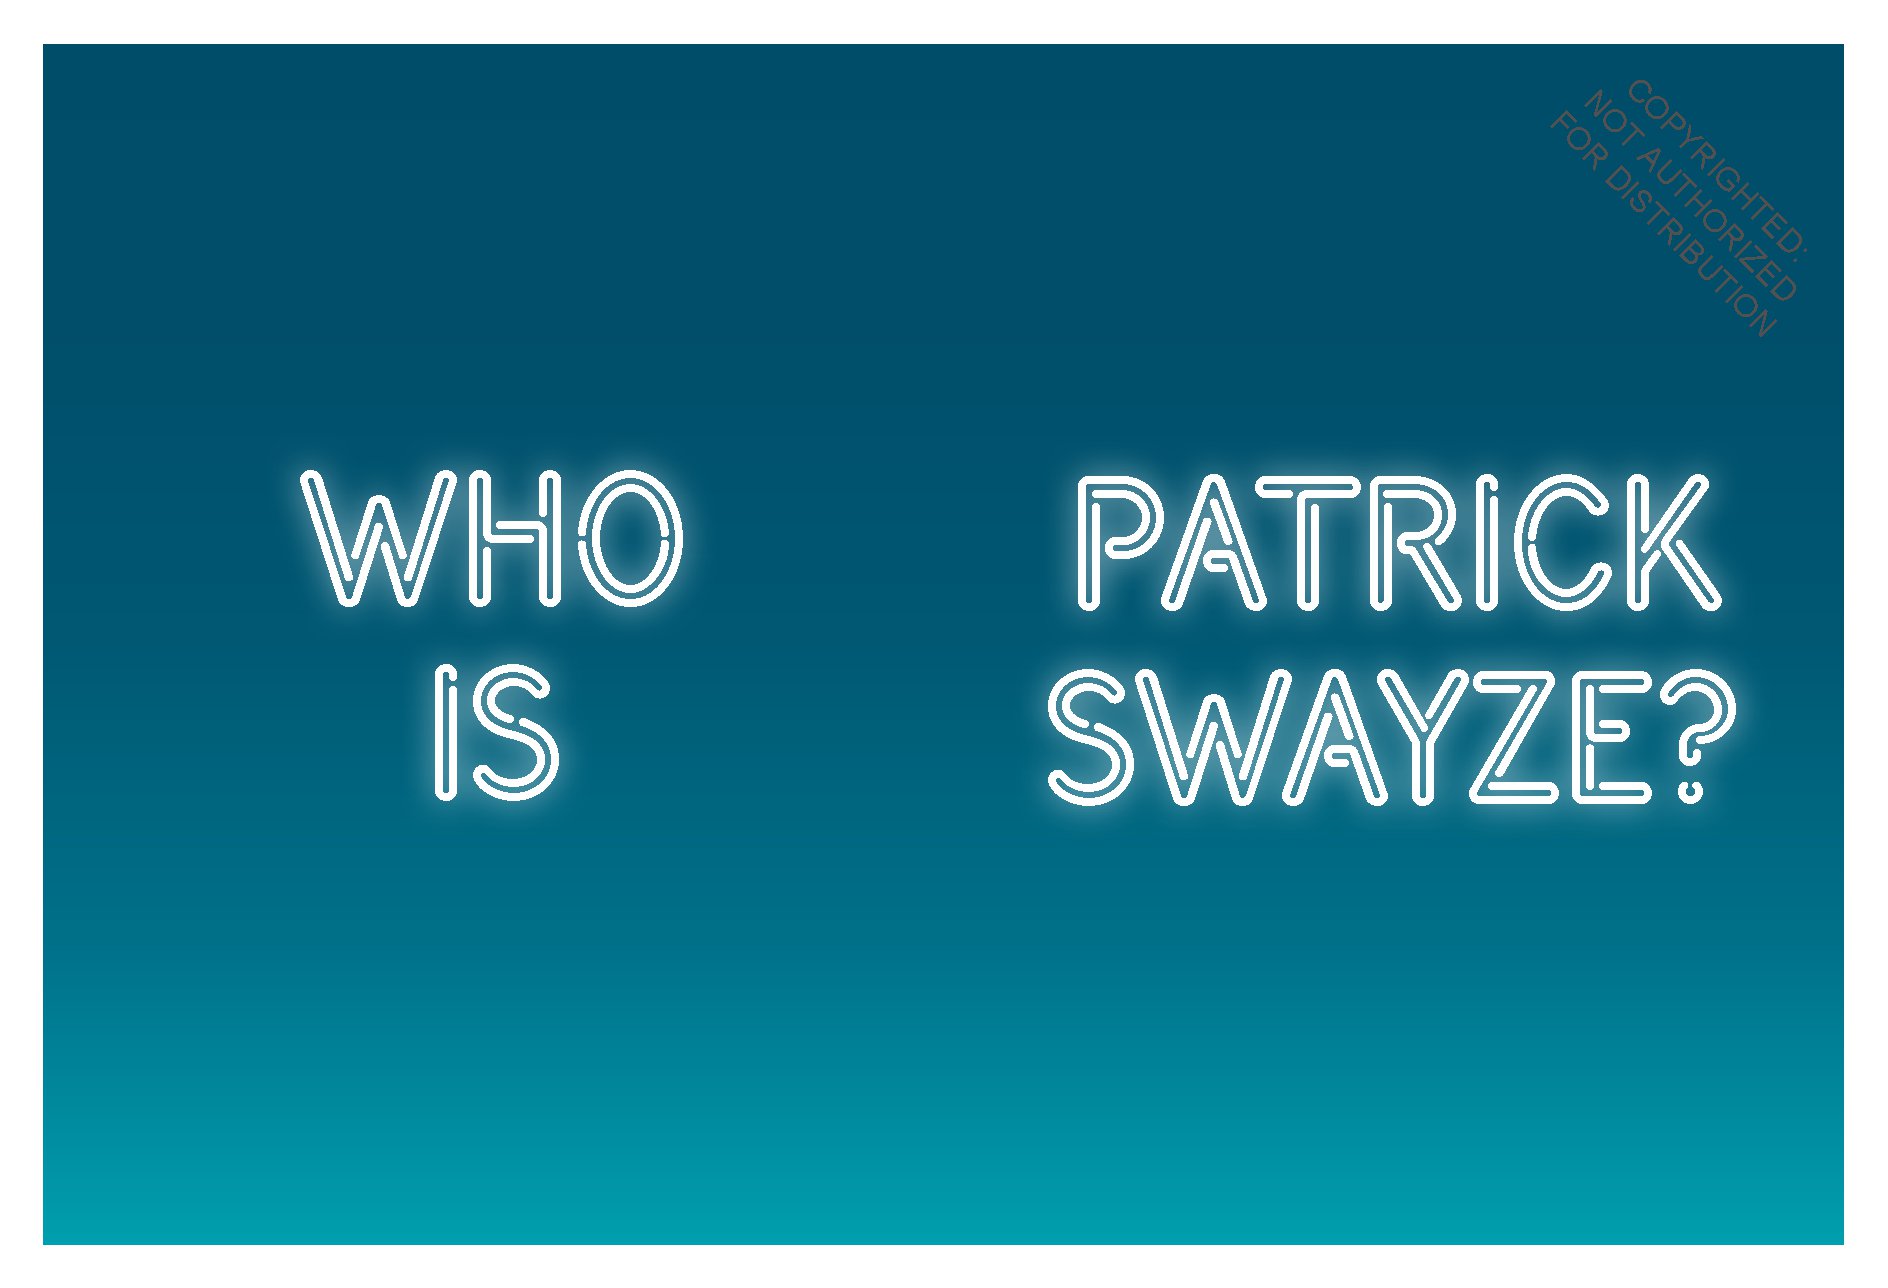 Being Patrick Swayze